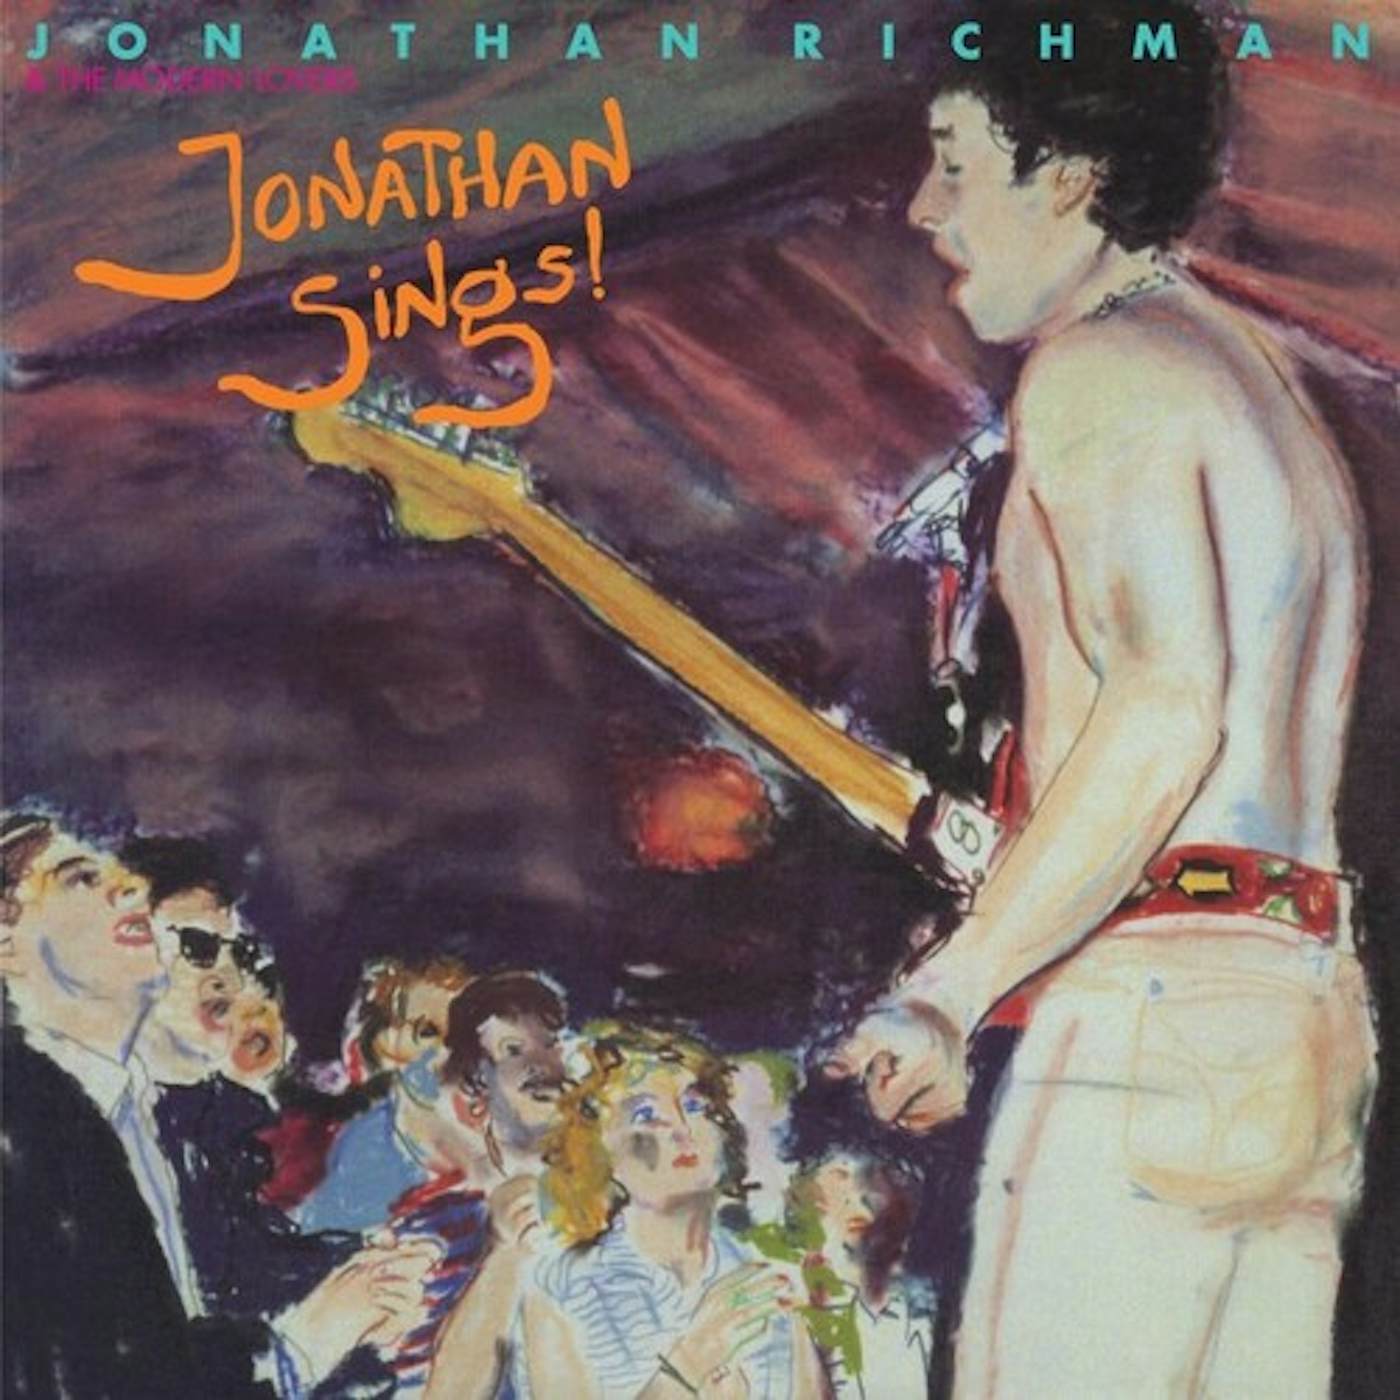 Jonathan Richman & The Modern Lovers JONATHAN SINGS! CD